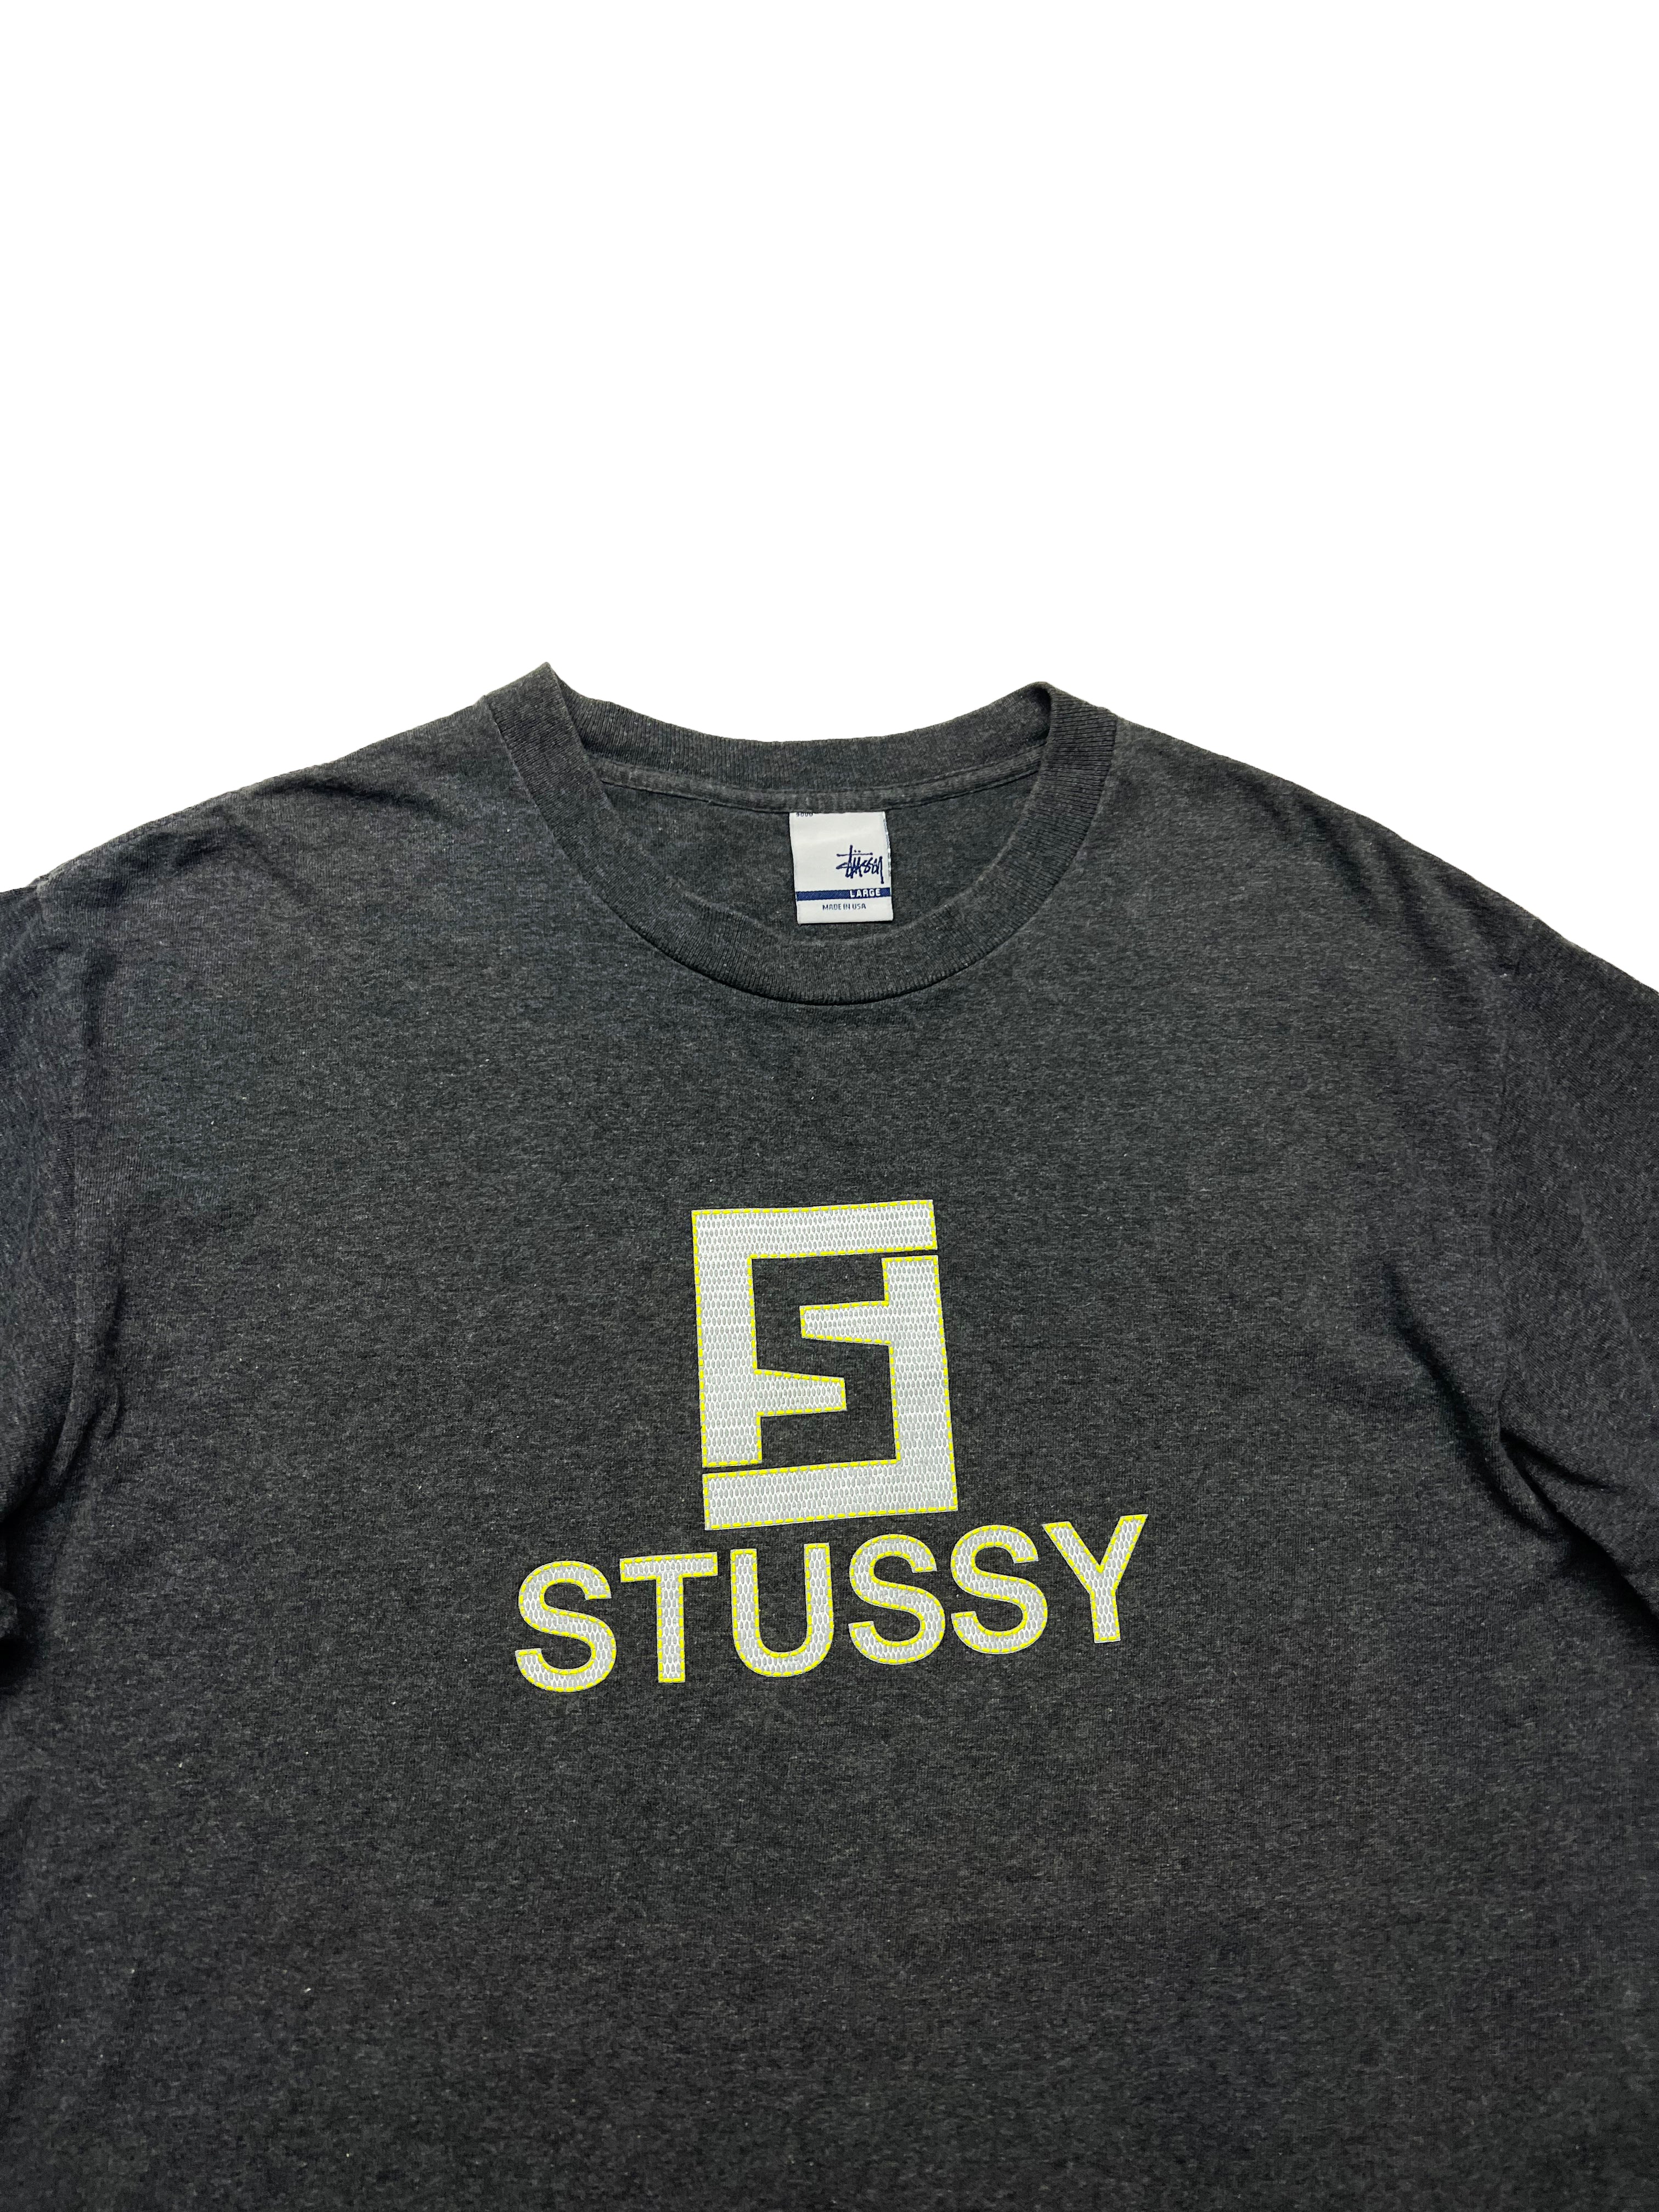 Stussy Fendi T-shirt 2001